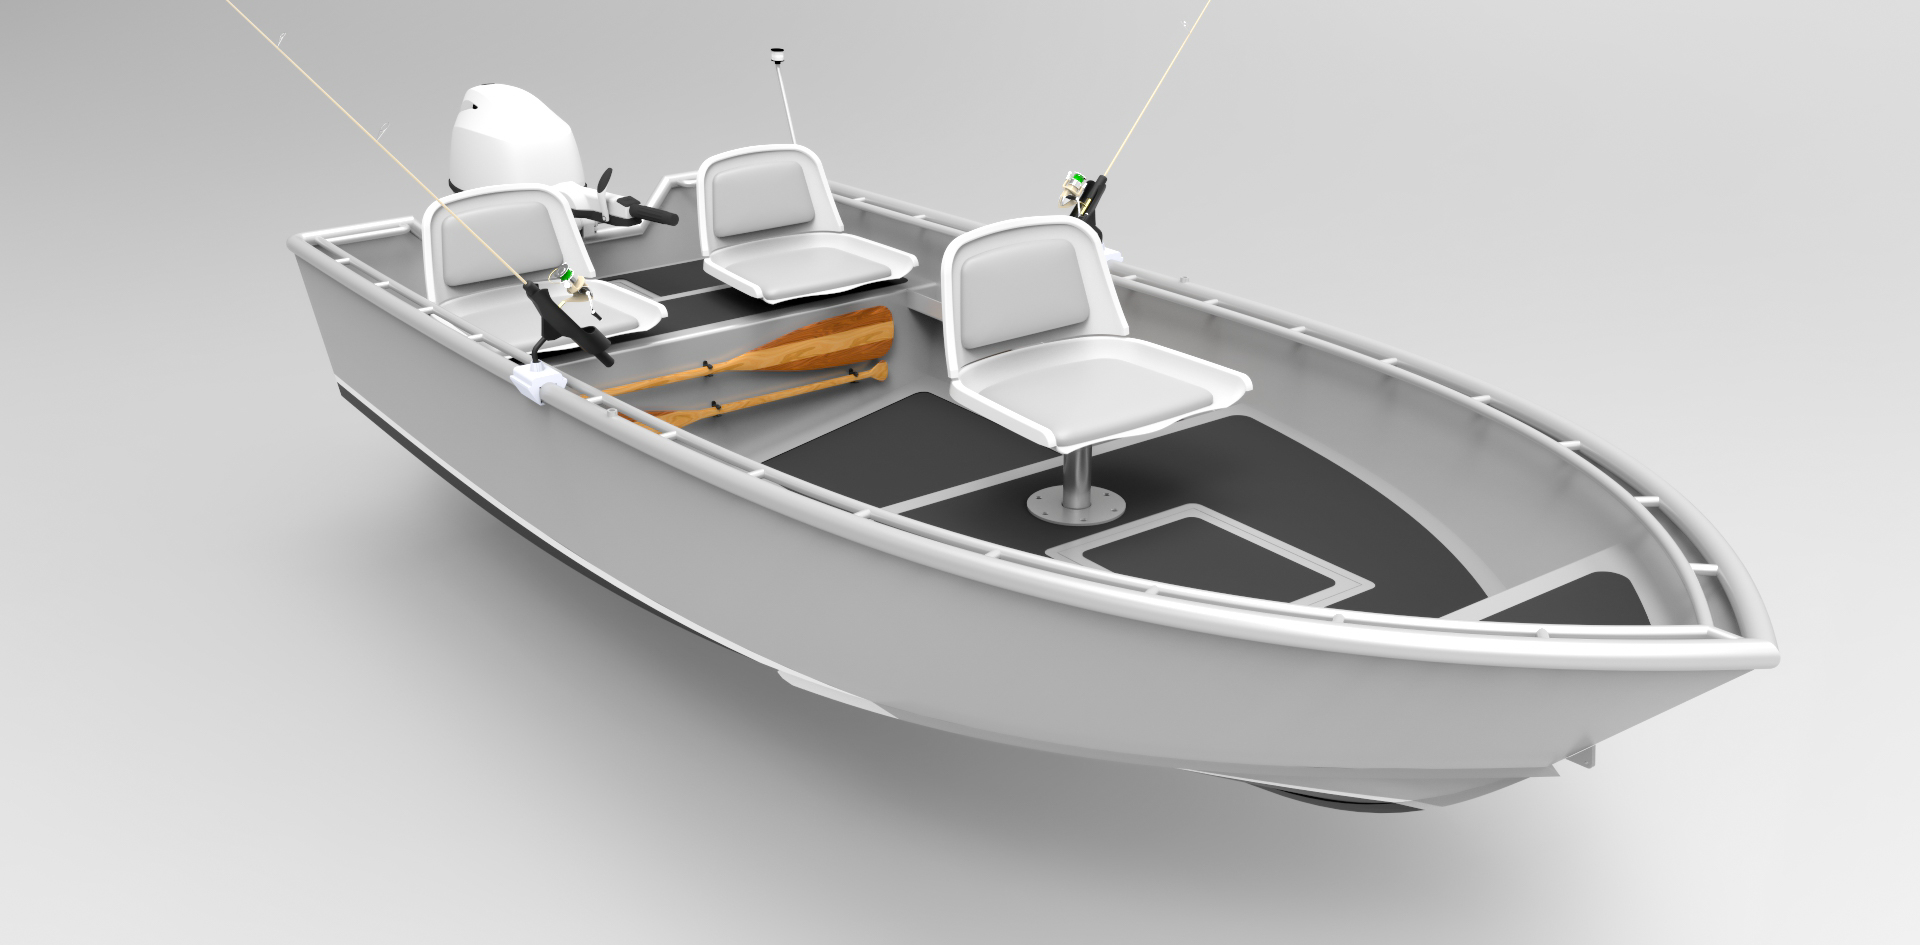 sportfisher 1030 aluminium boat design net